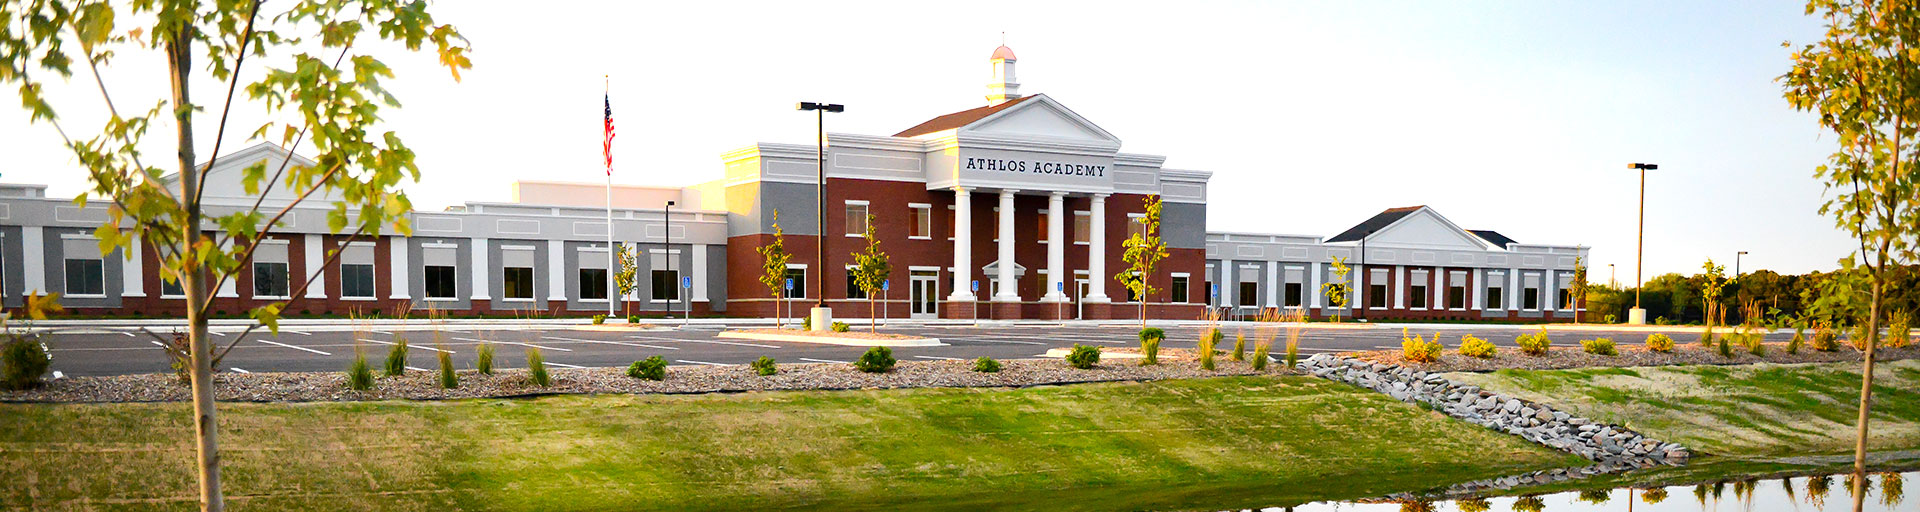 Athlos Academy of St. Cloud school facility